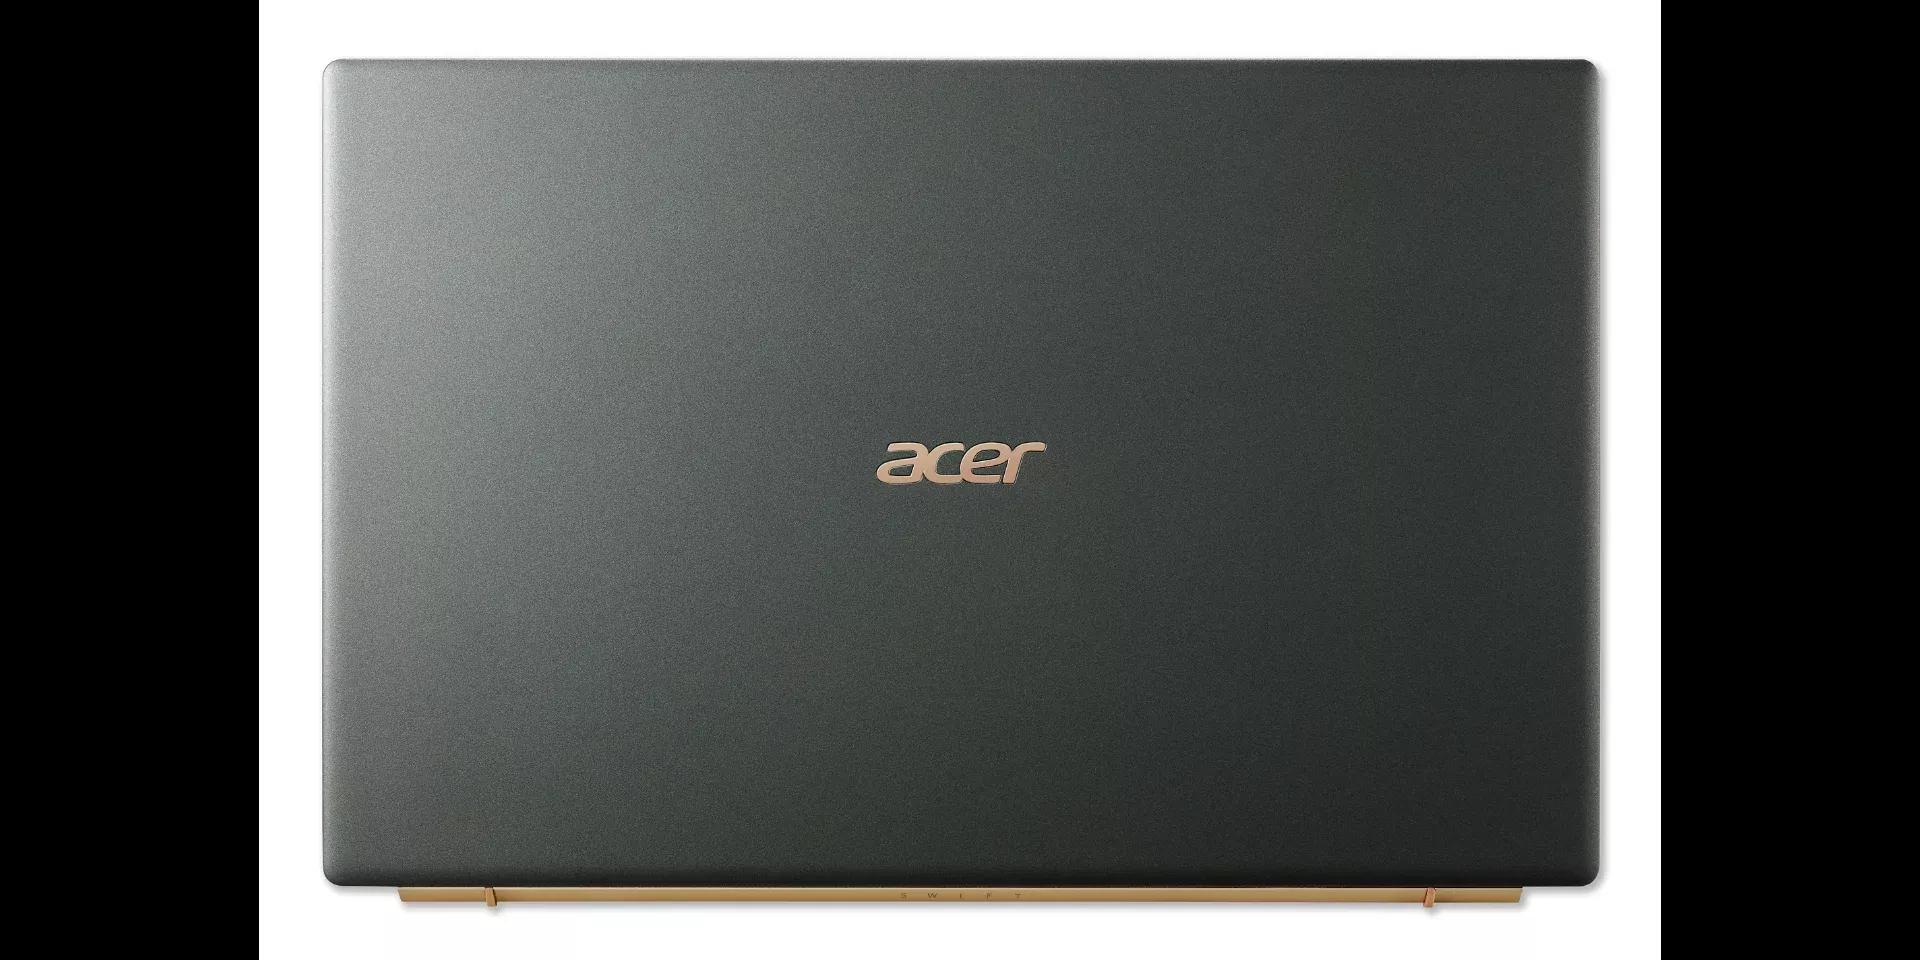 Acer Swift 5 2020 i7 10Th Gen | 8GB RAM | 512GB SSD | 14" FHD Touch Display